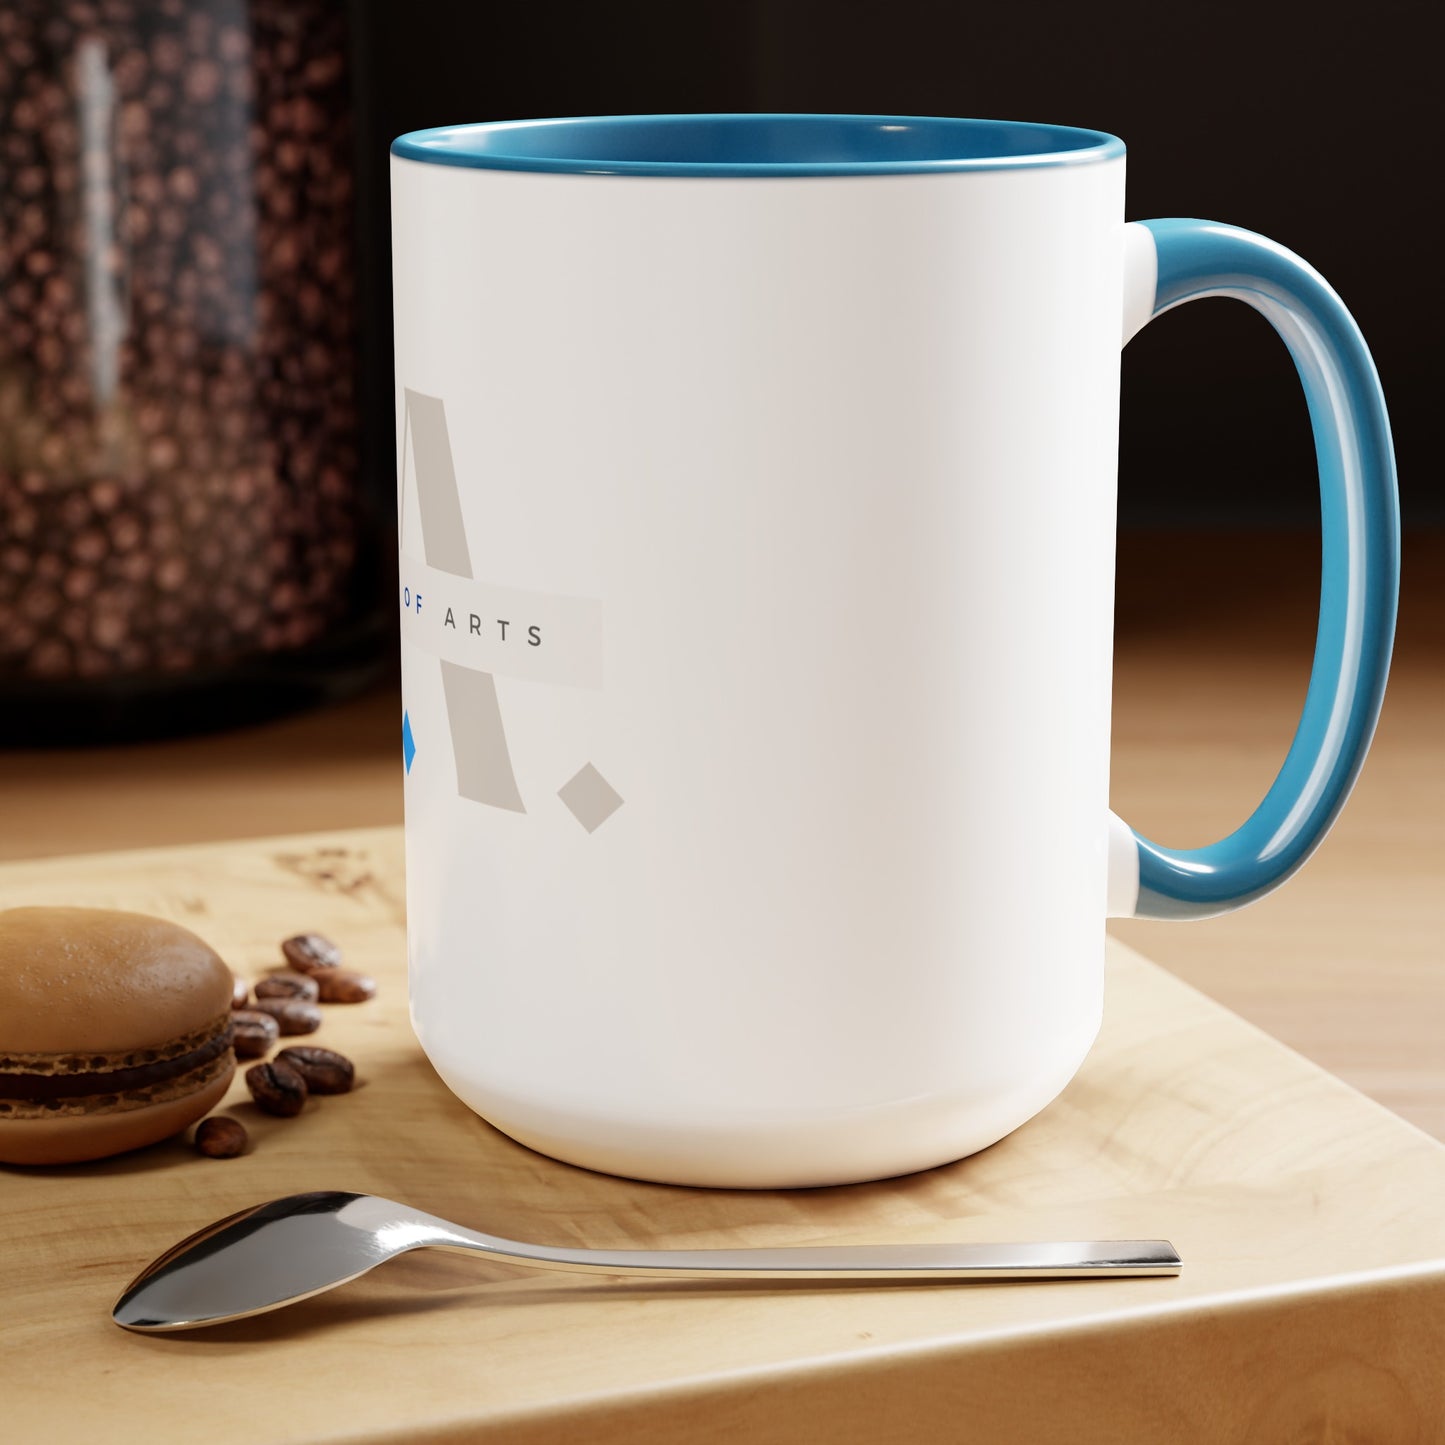 B.A.- Custom coffee mug with bachelor of arts credentials